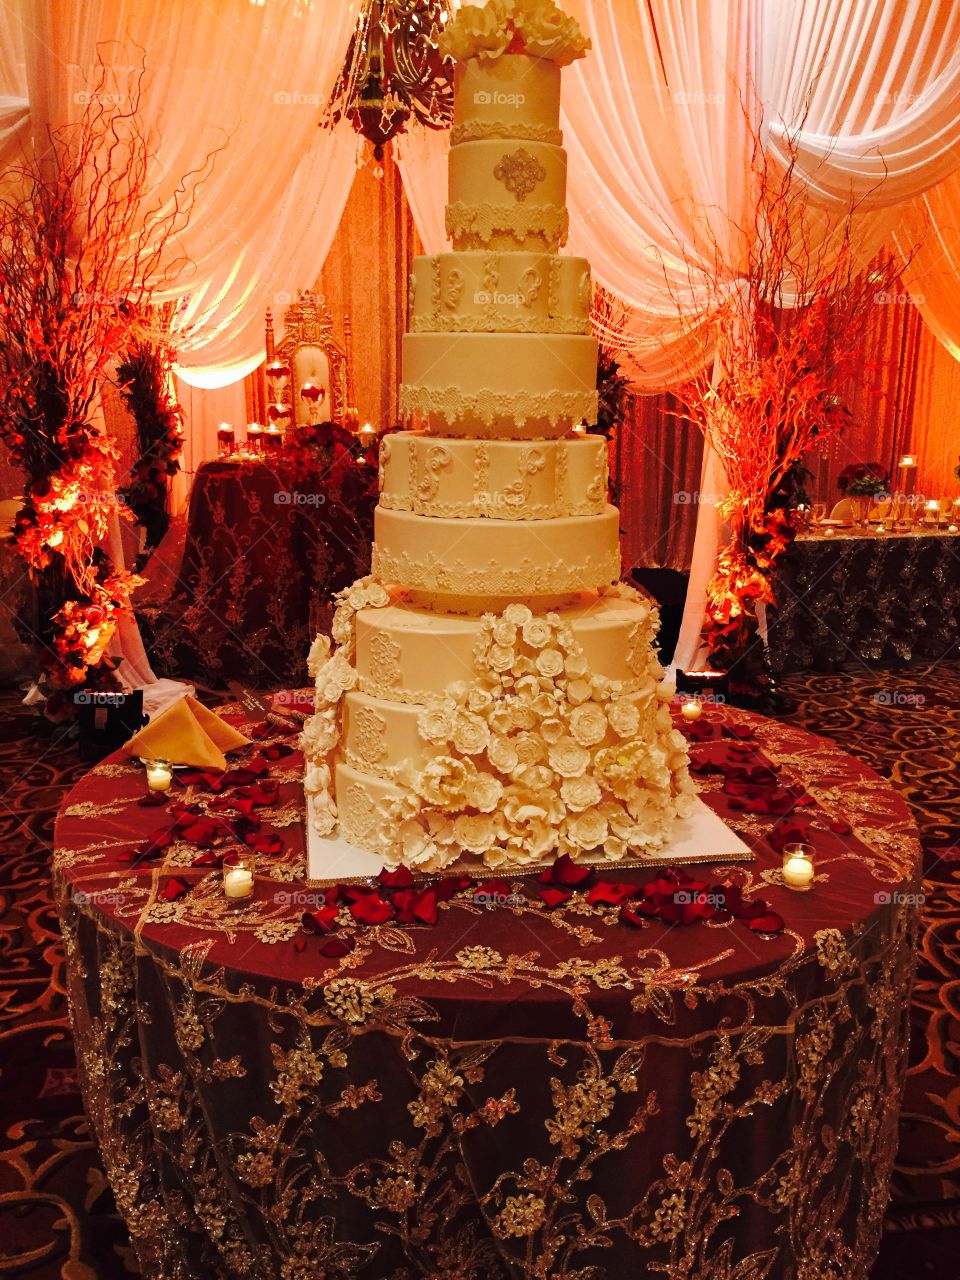 Celestial Wedding Cake